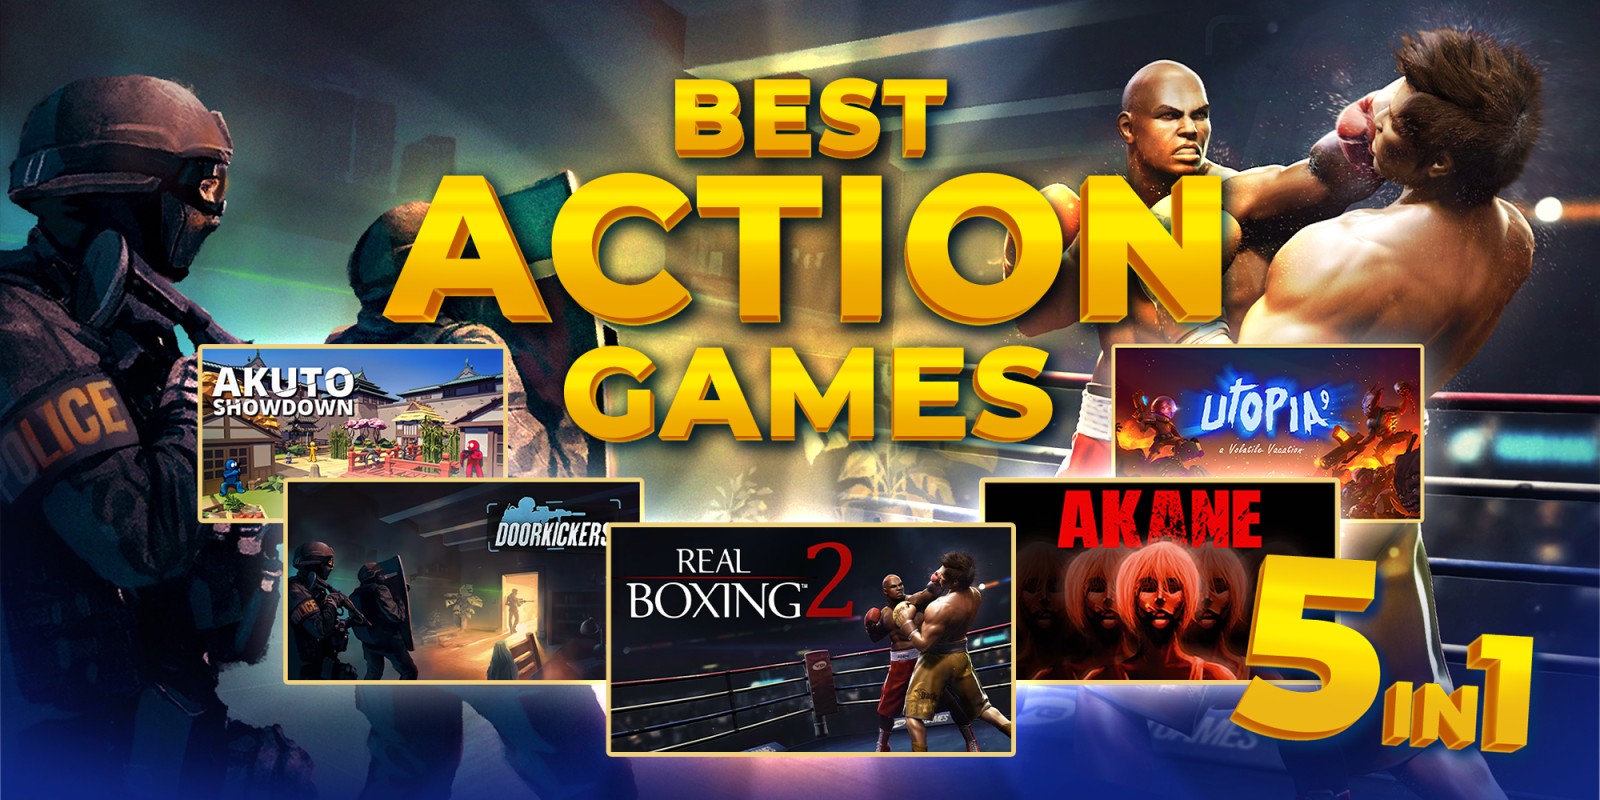 Best Action Games 5-in-1